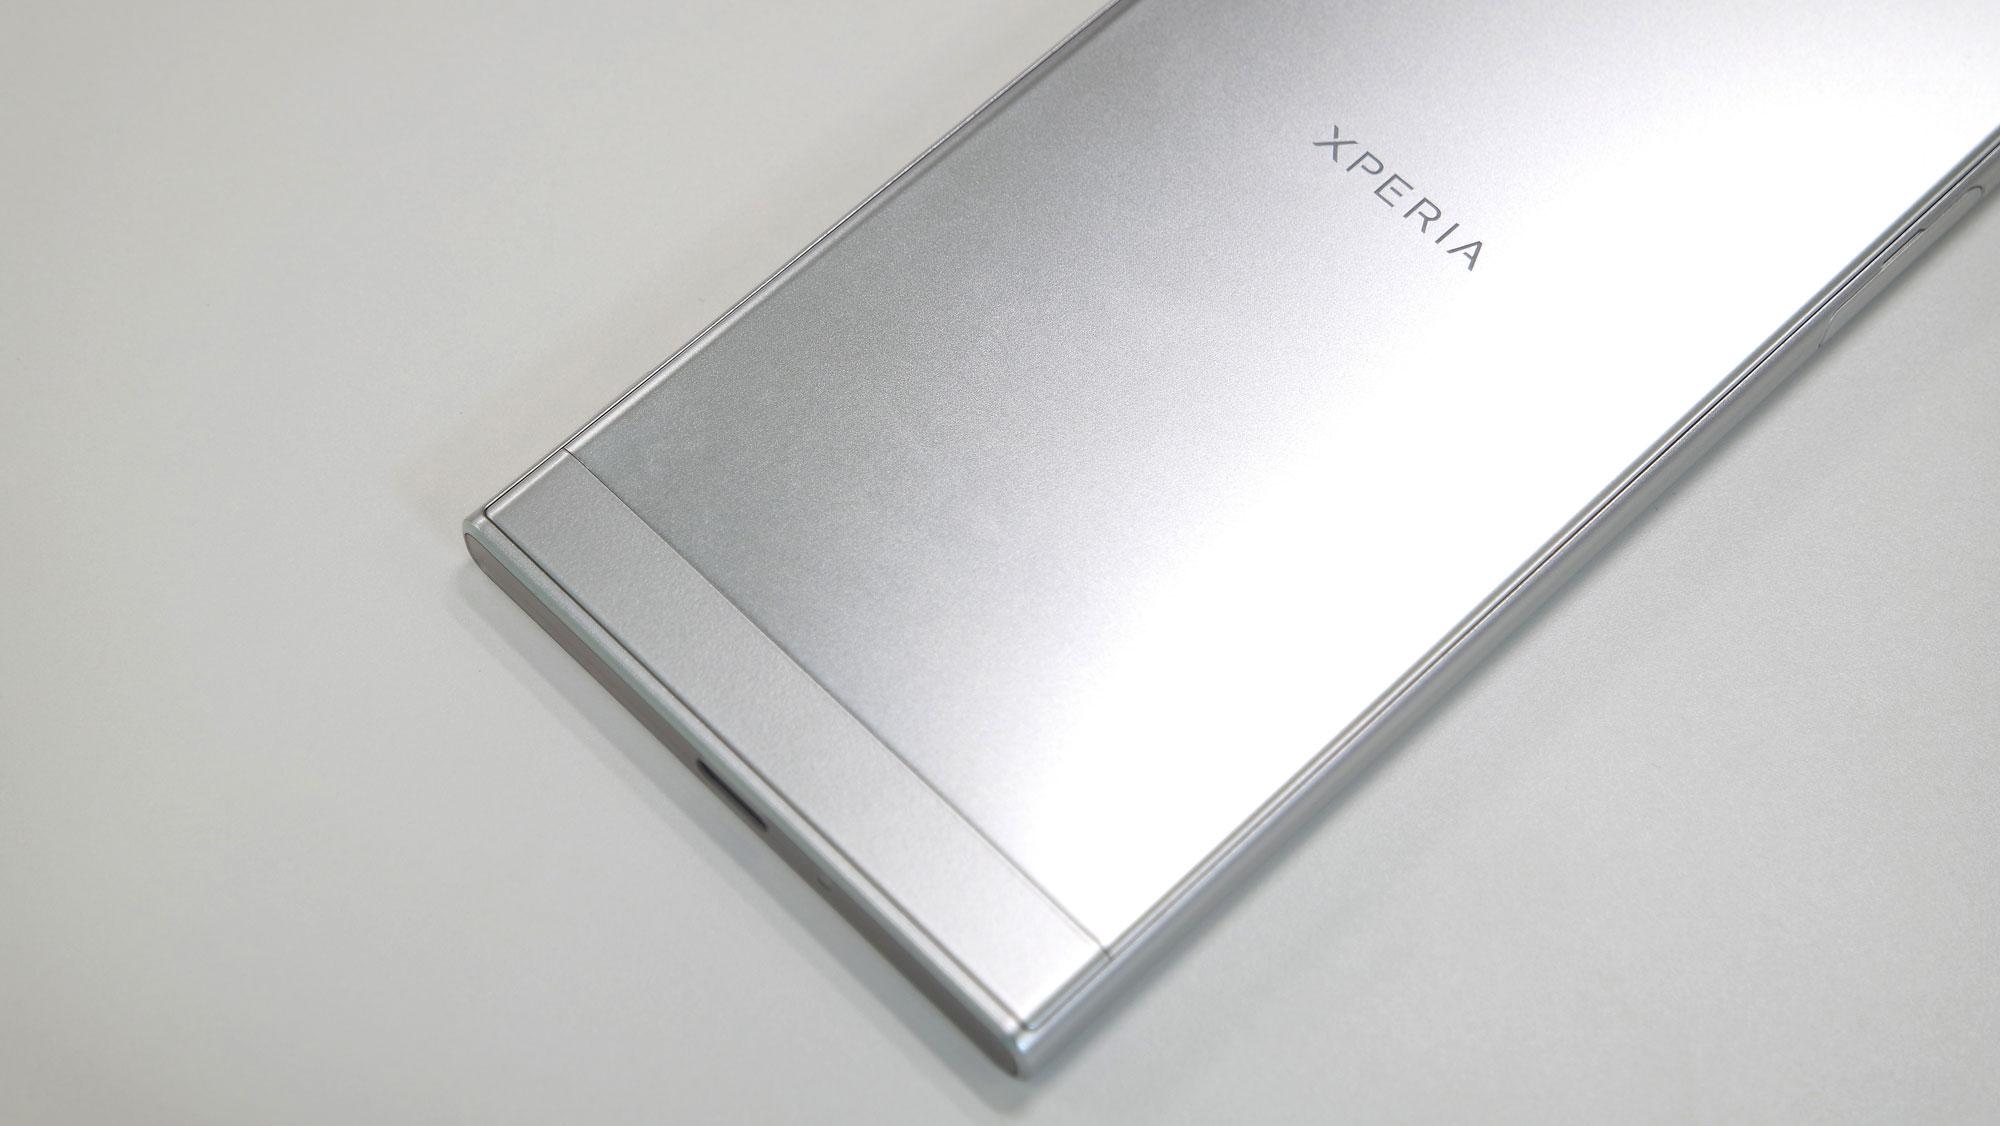 Sony Xperia XZ detalle carcasa trasera